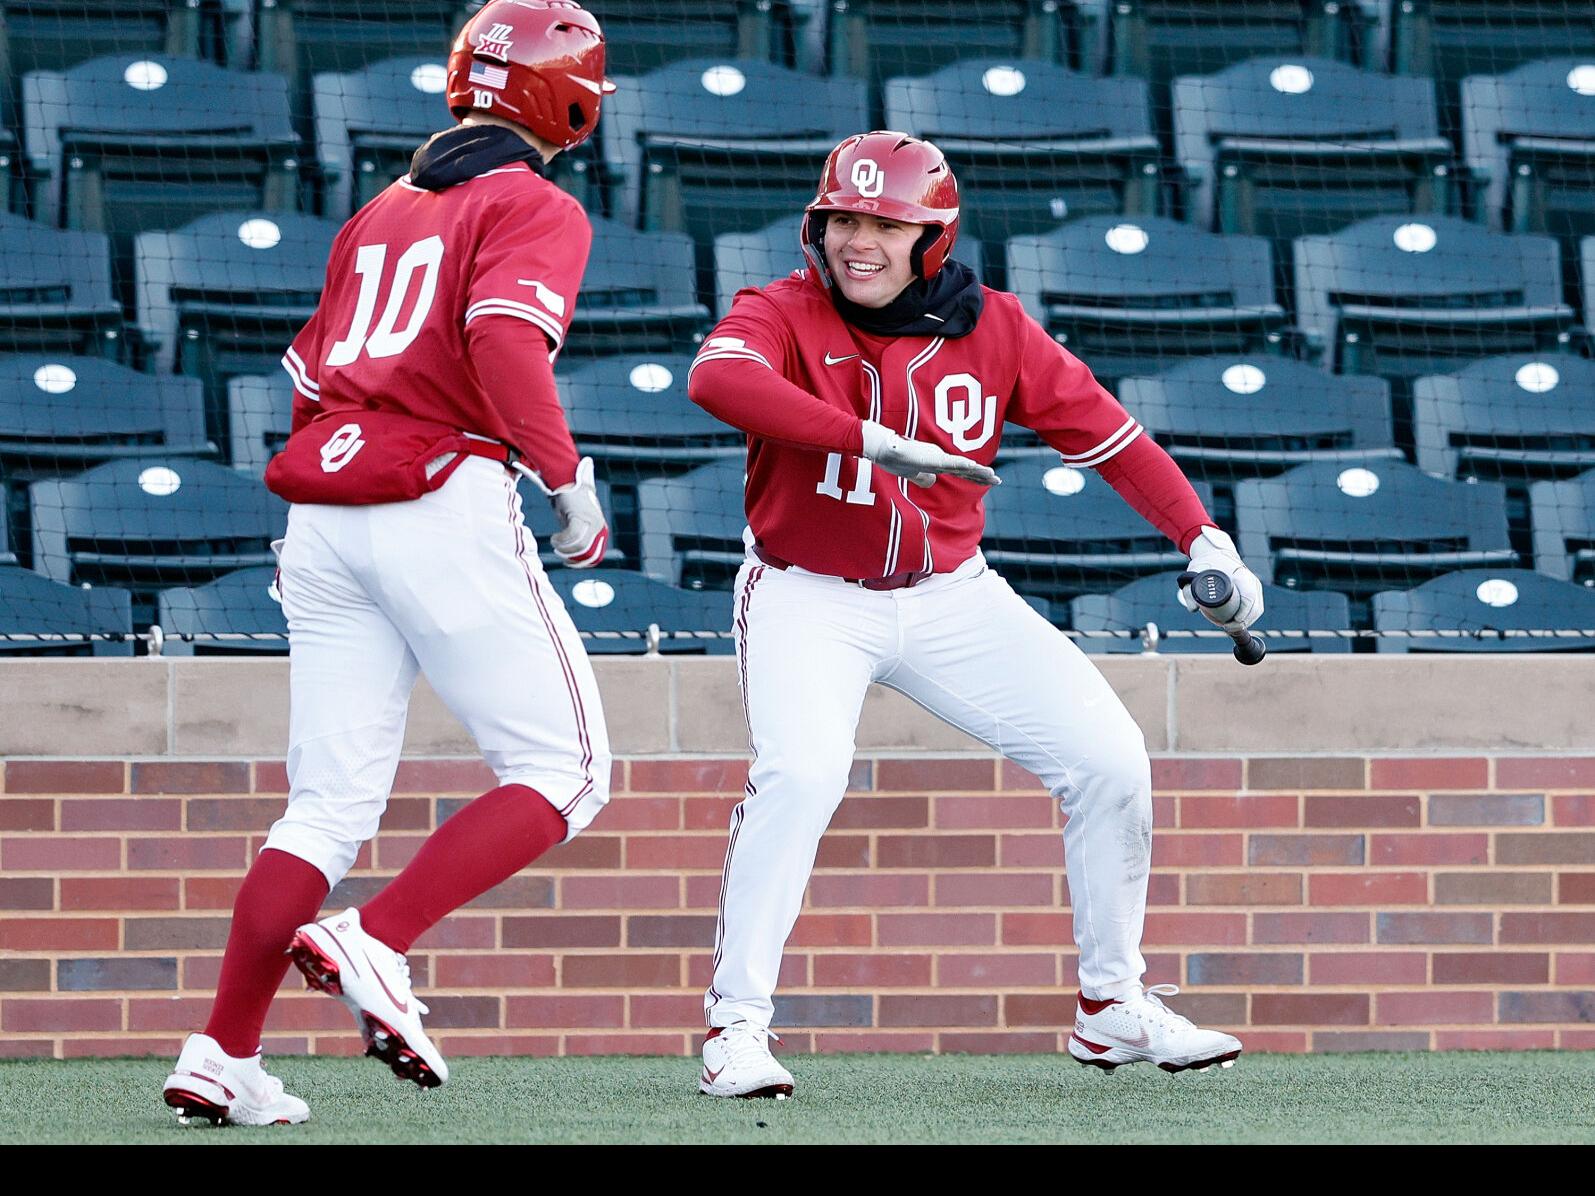 OU baseball: OU-Texas series moved to Arlington, Tuesday's game